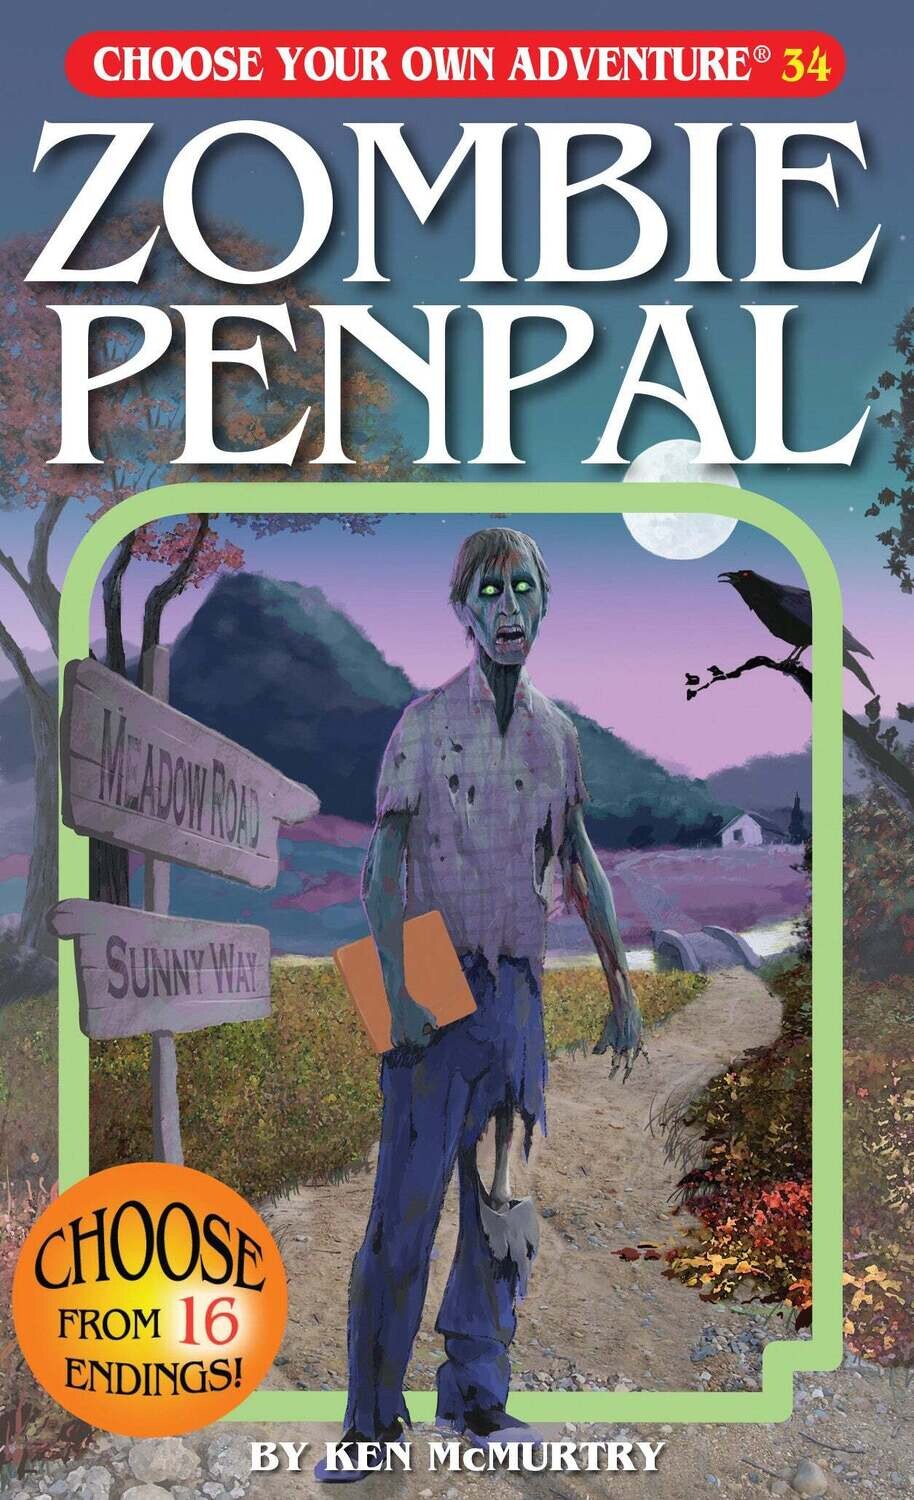 Choose Your Own Adventure Ghost Zombie Penpal